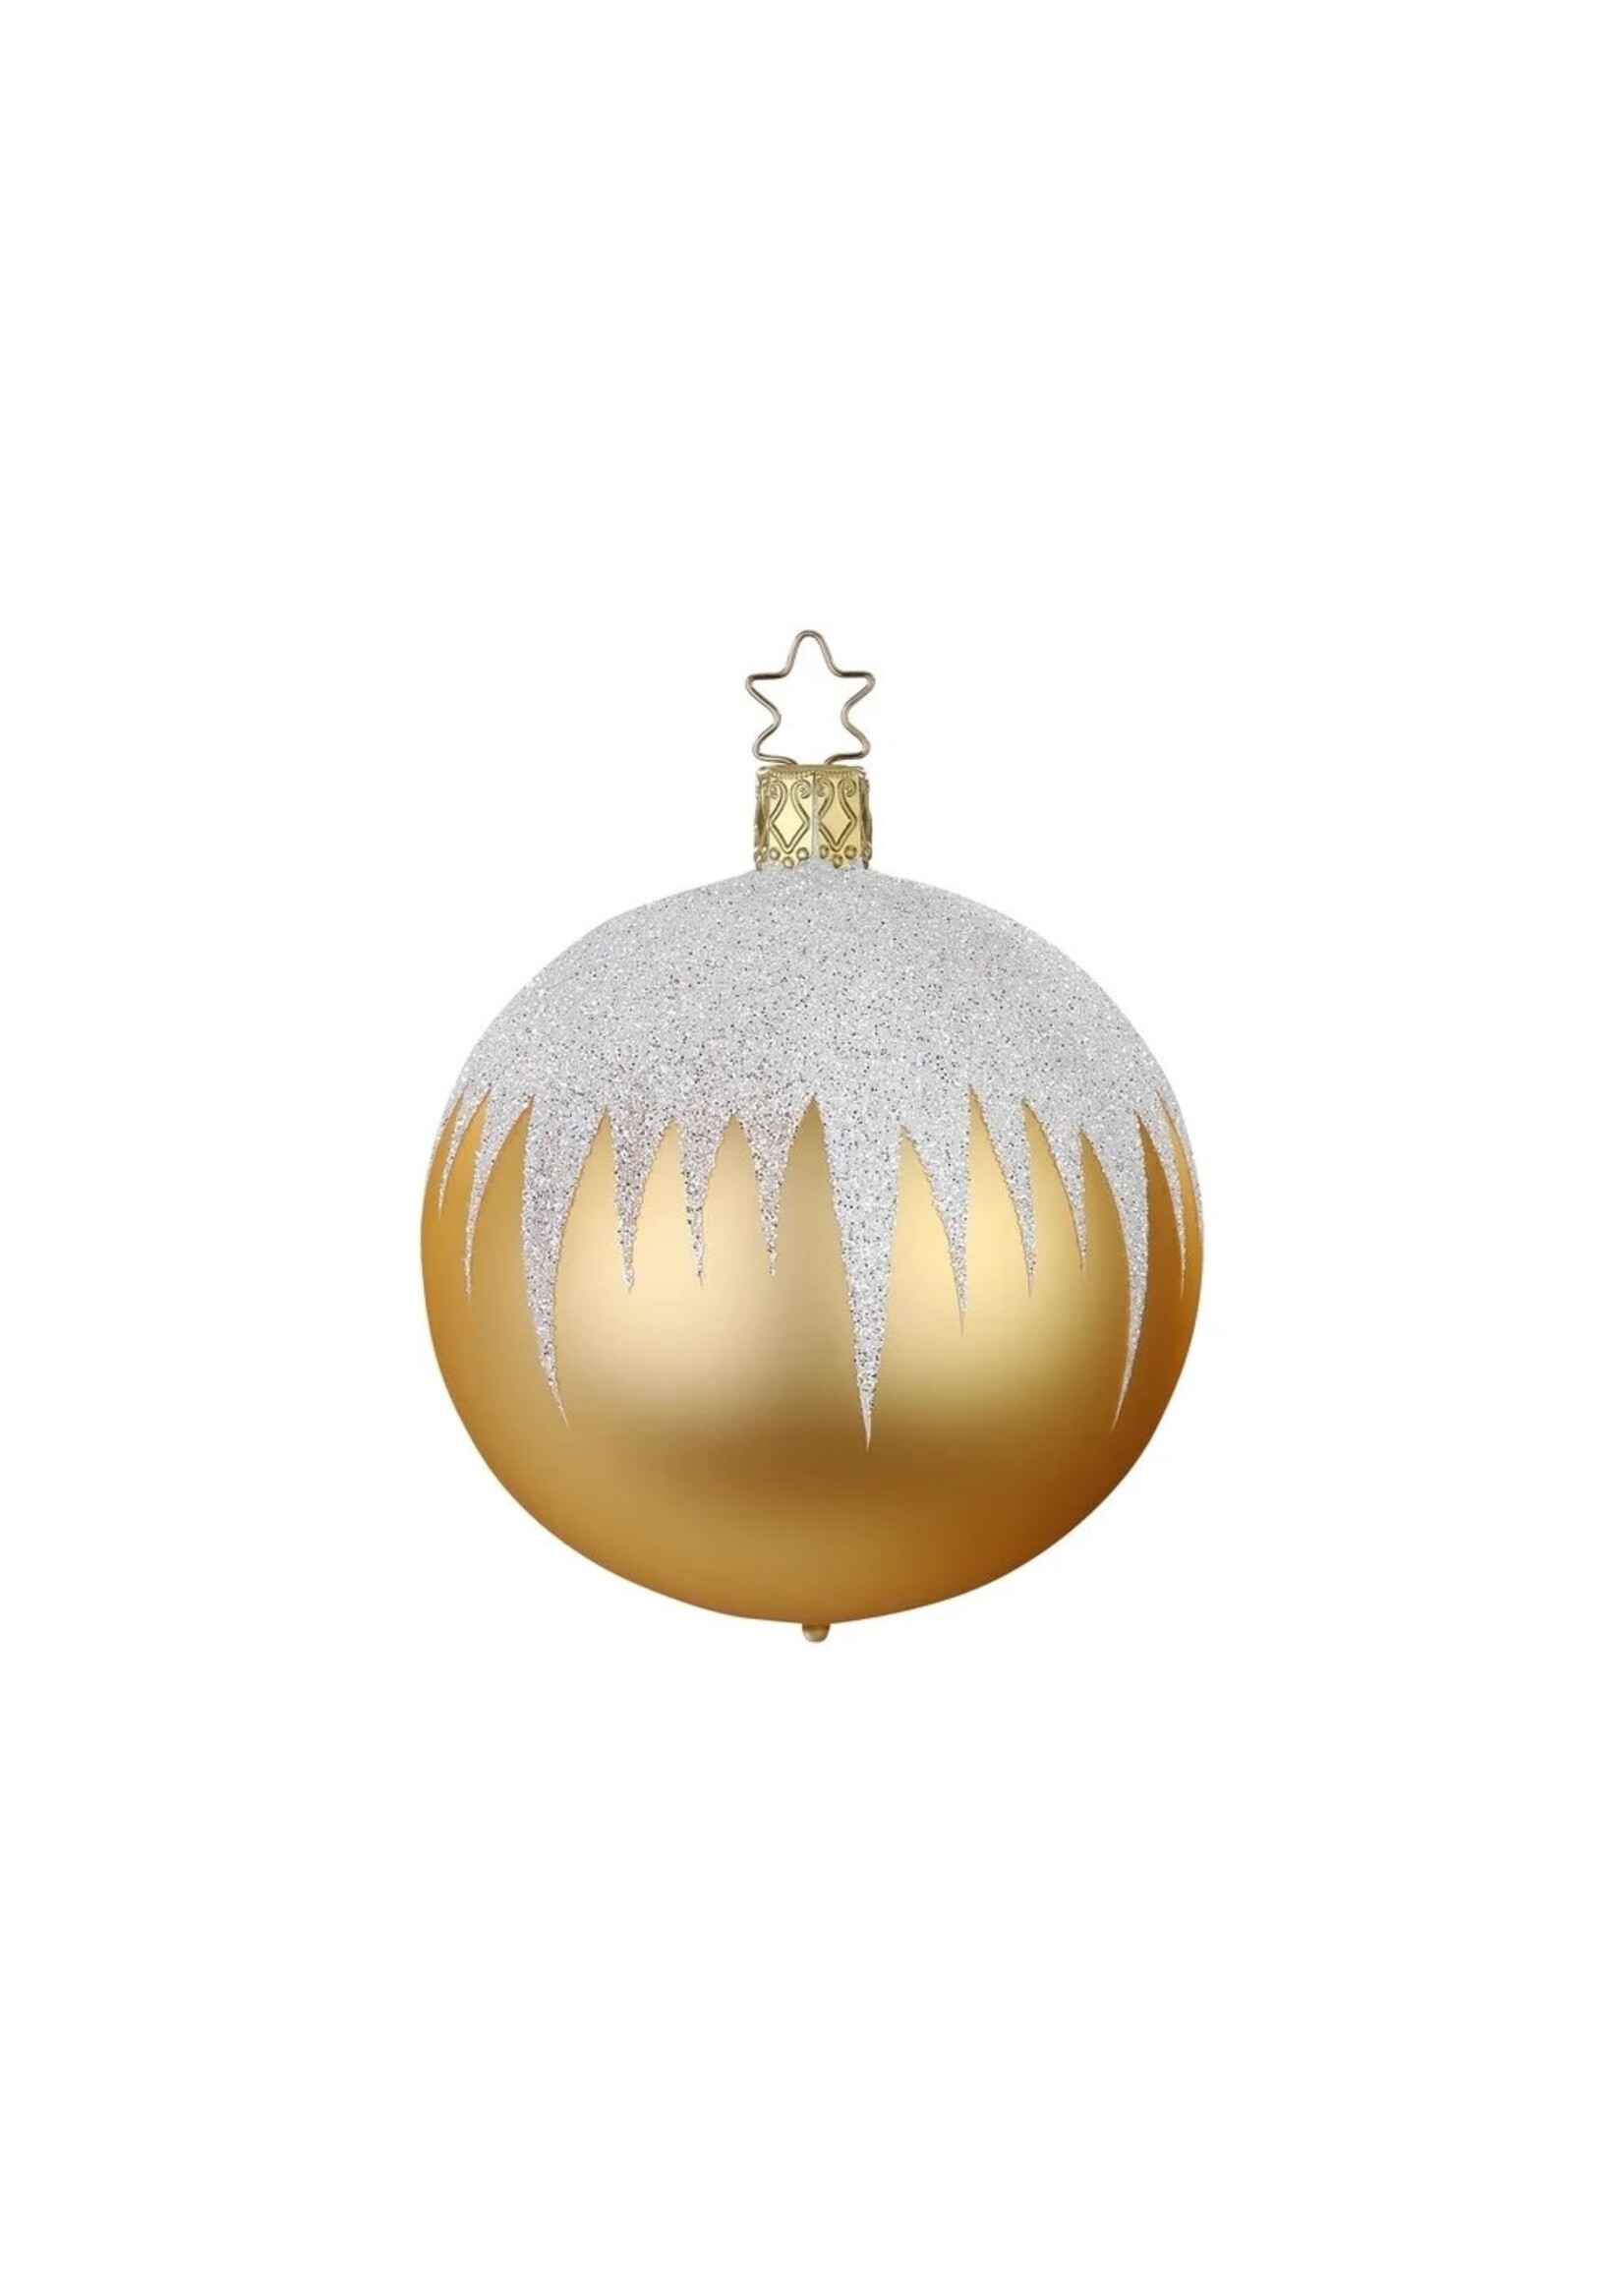 Ornament - Ball Inkagold Matt Icicle 2.4"